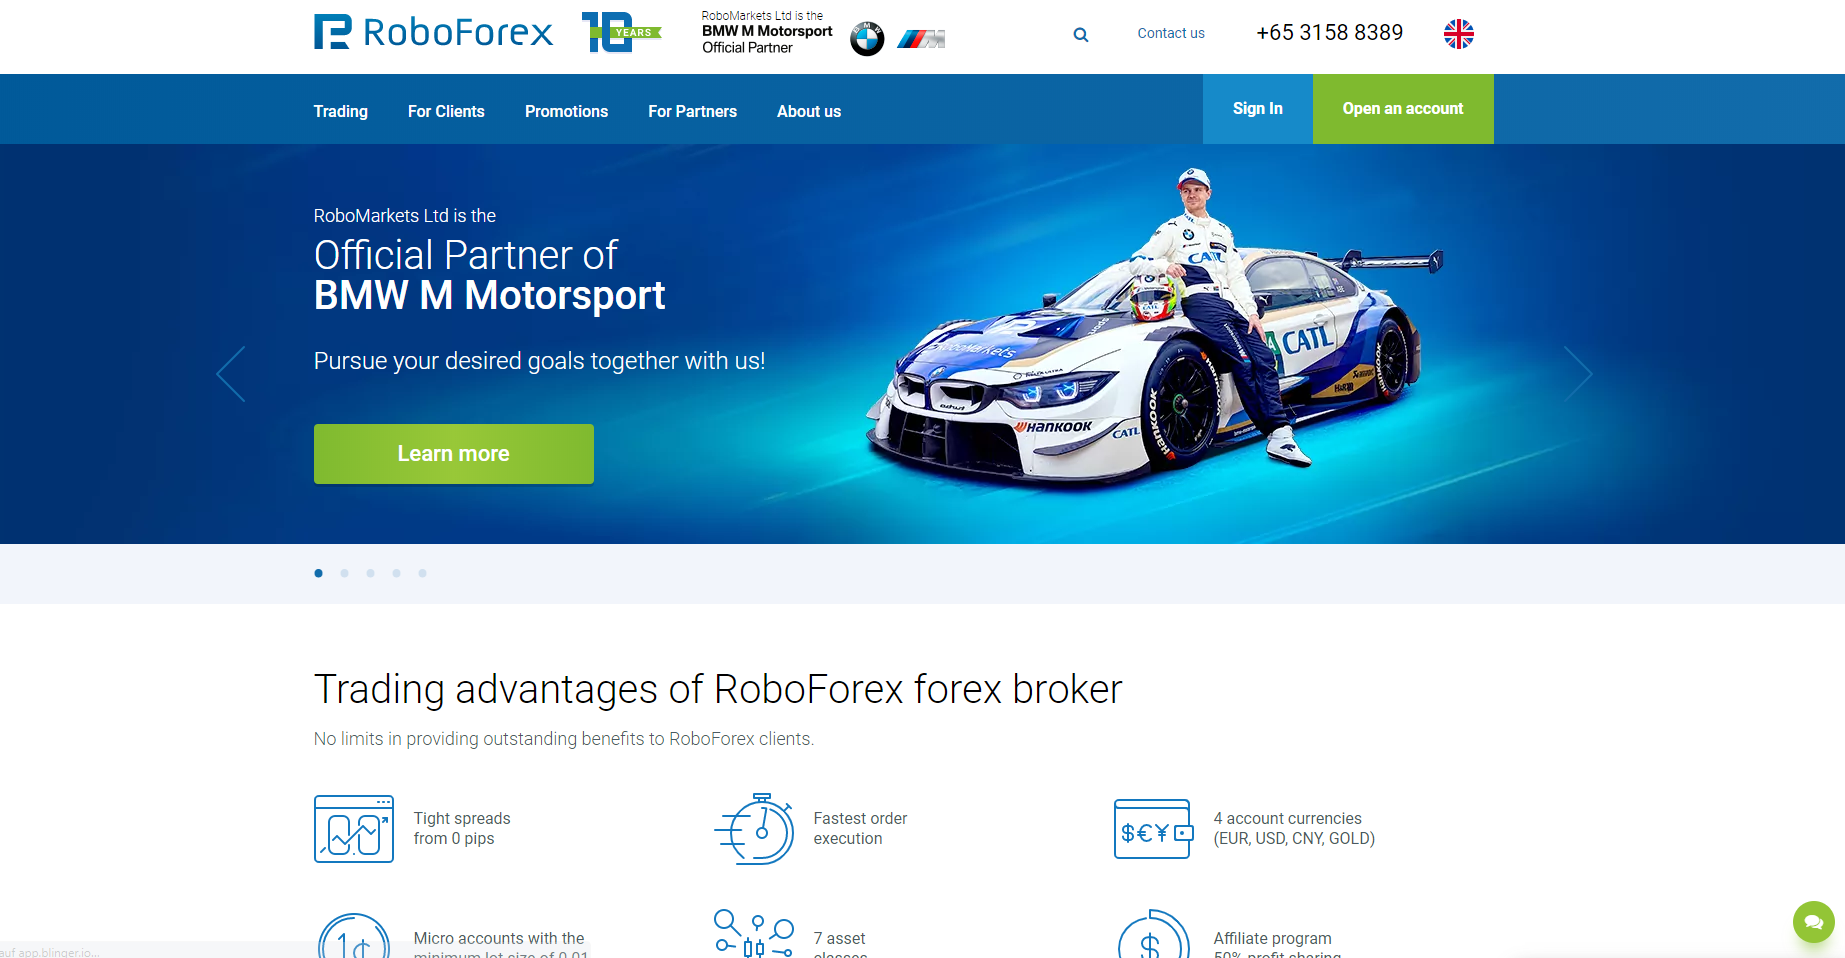 The official website of the forex broker RoboForex